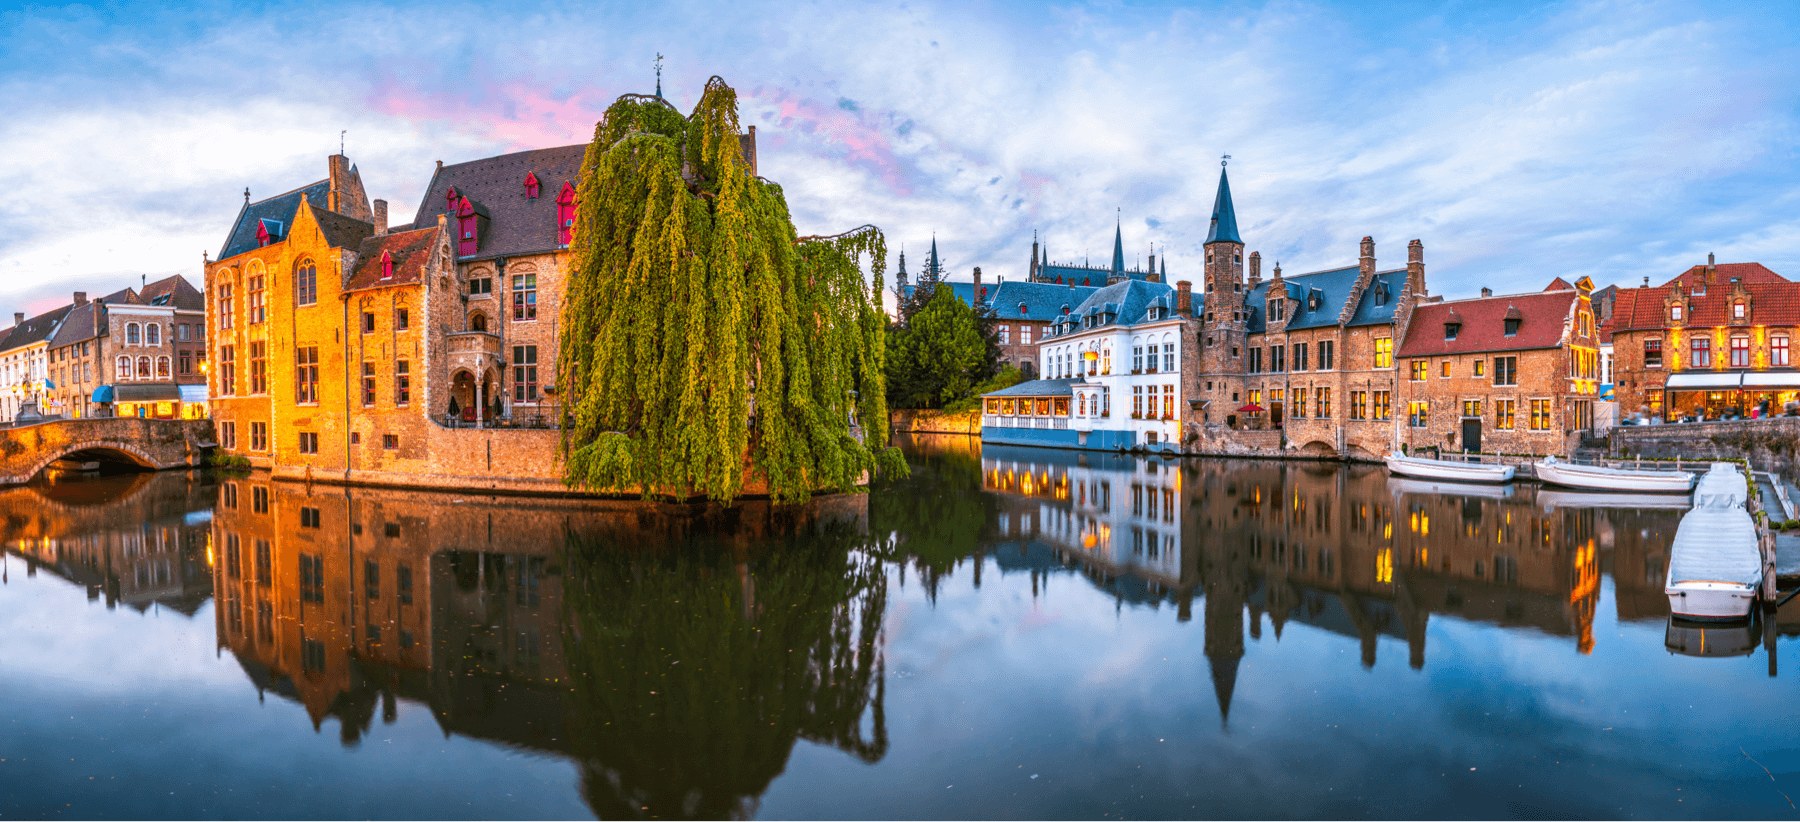 a town in Belgium